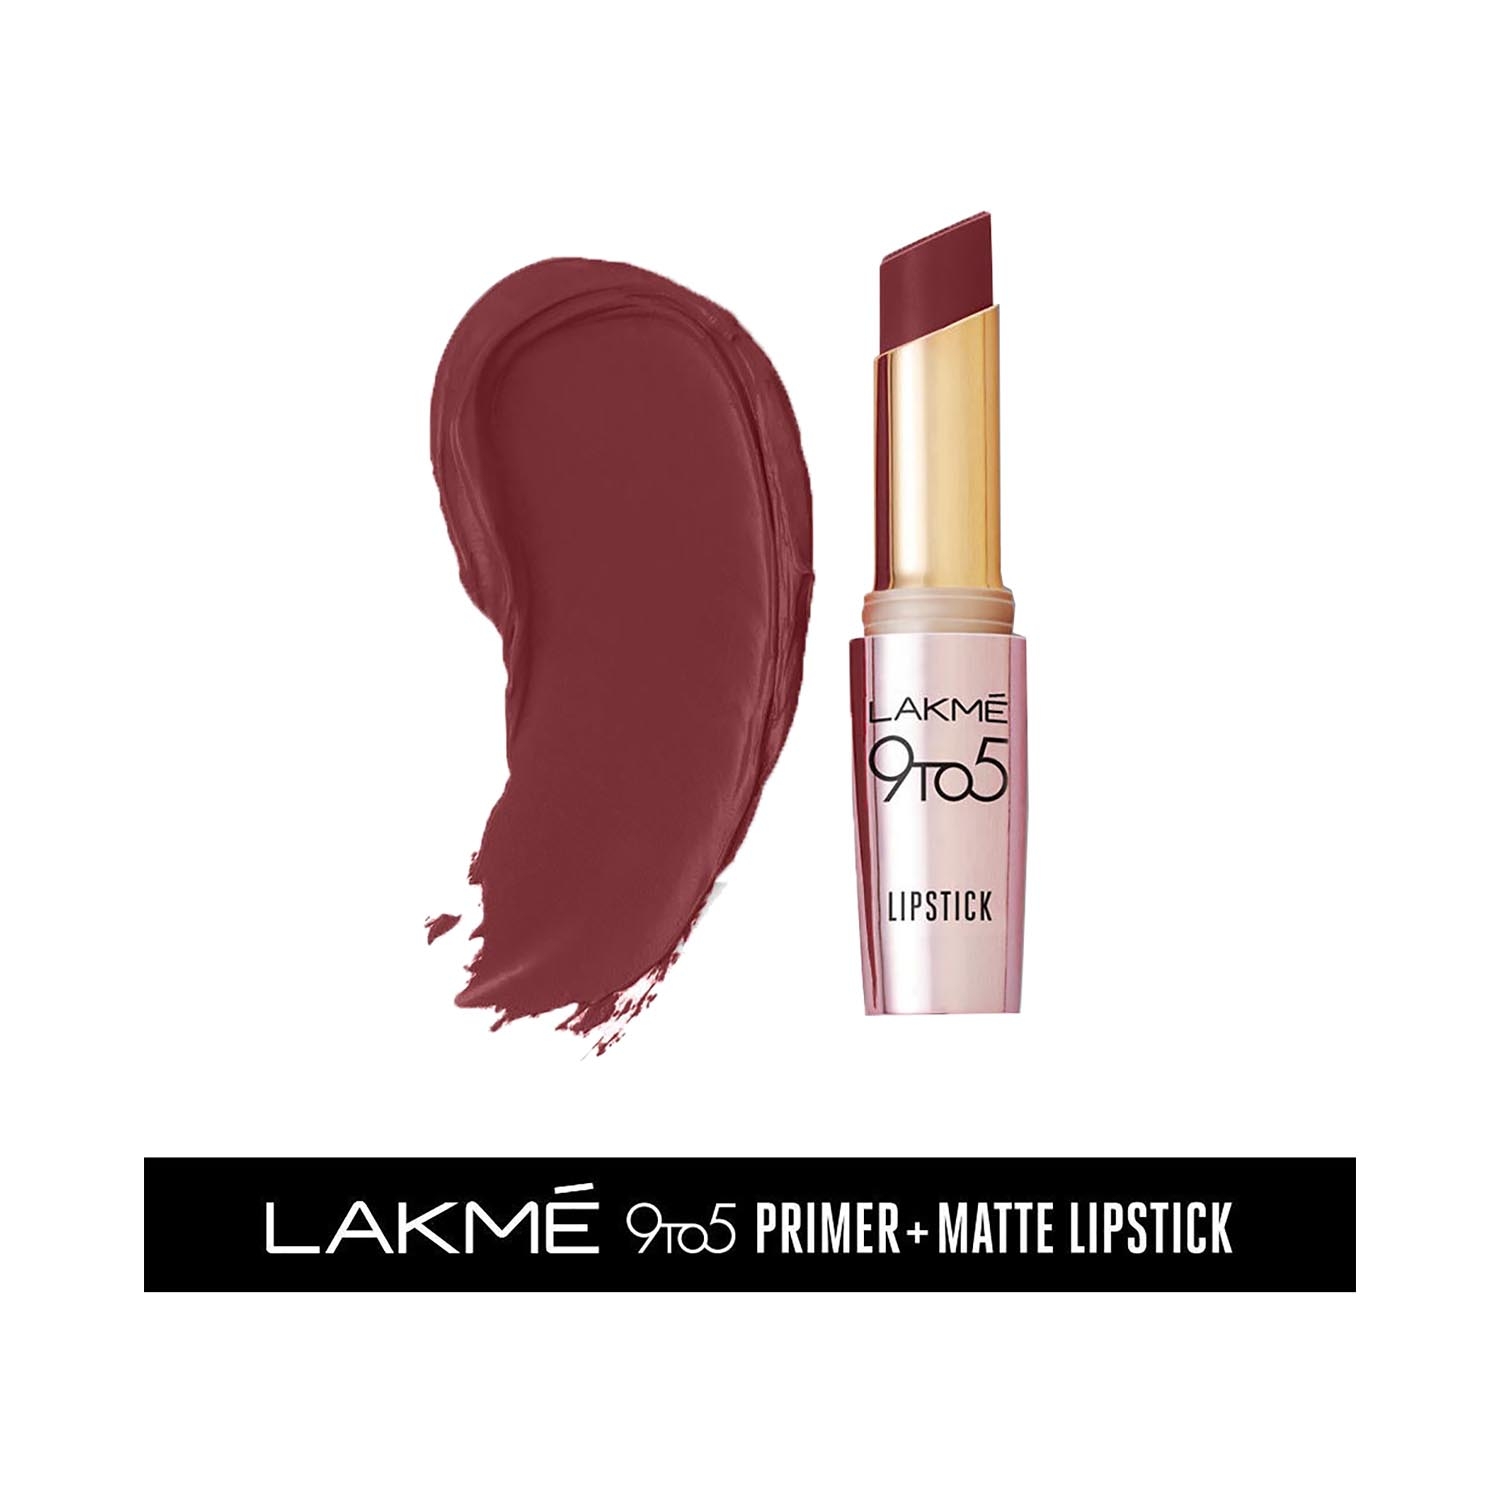 Lakme | Lakme 9 To 5 Primer + Matte Lip Color - MM3 Sangria Weekend (3.6g)